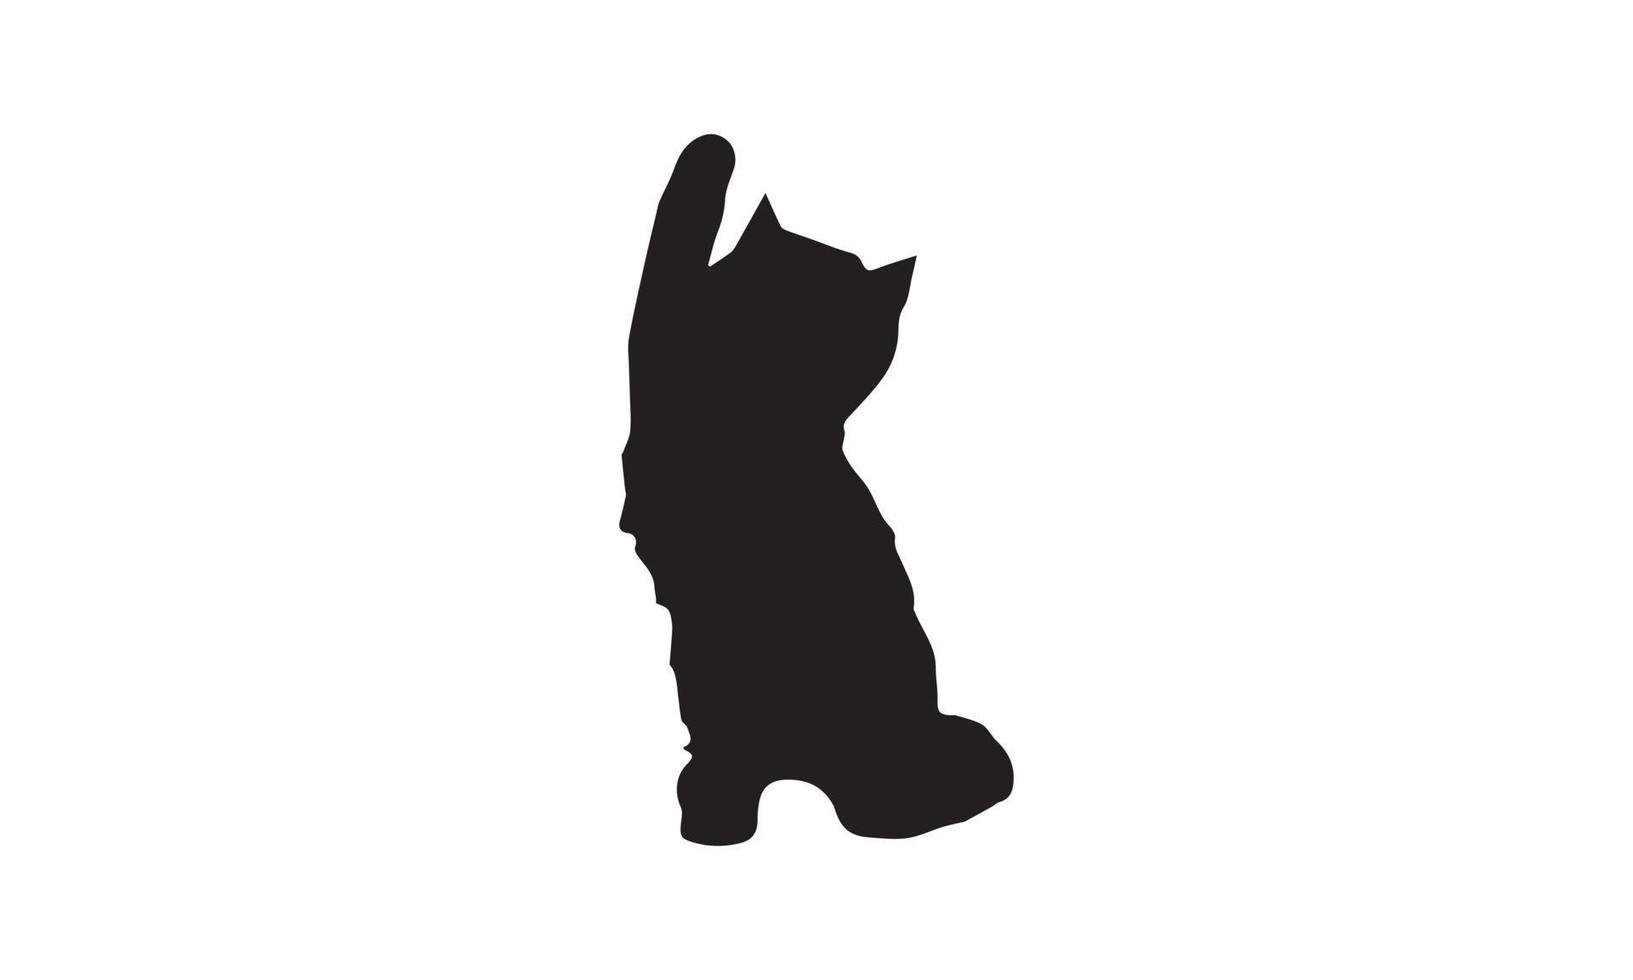 chat vector illustration design noir et blanc